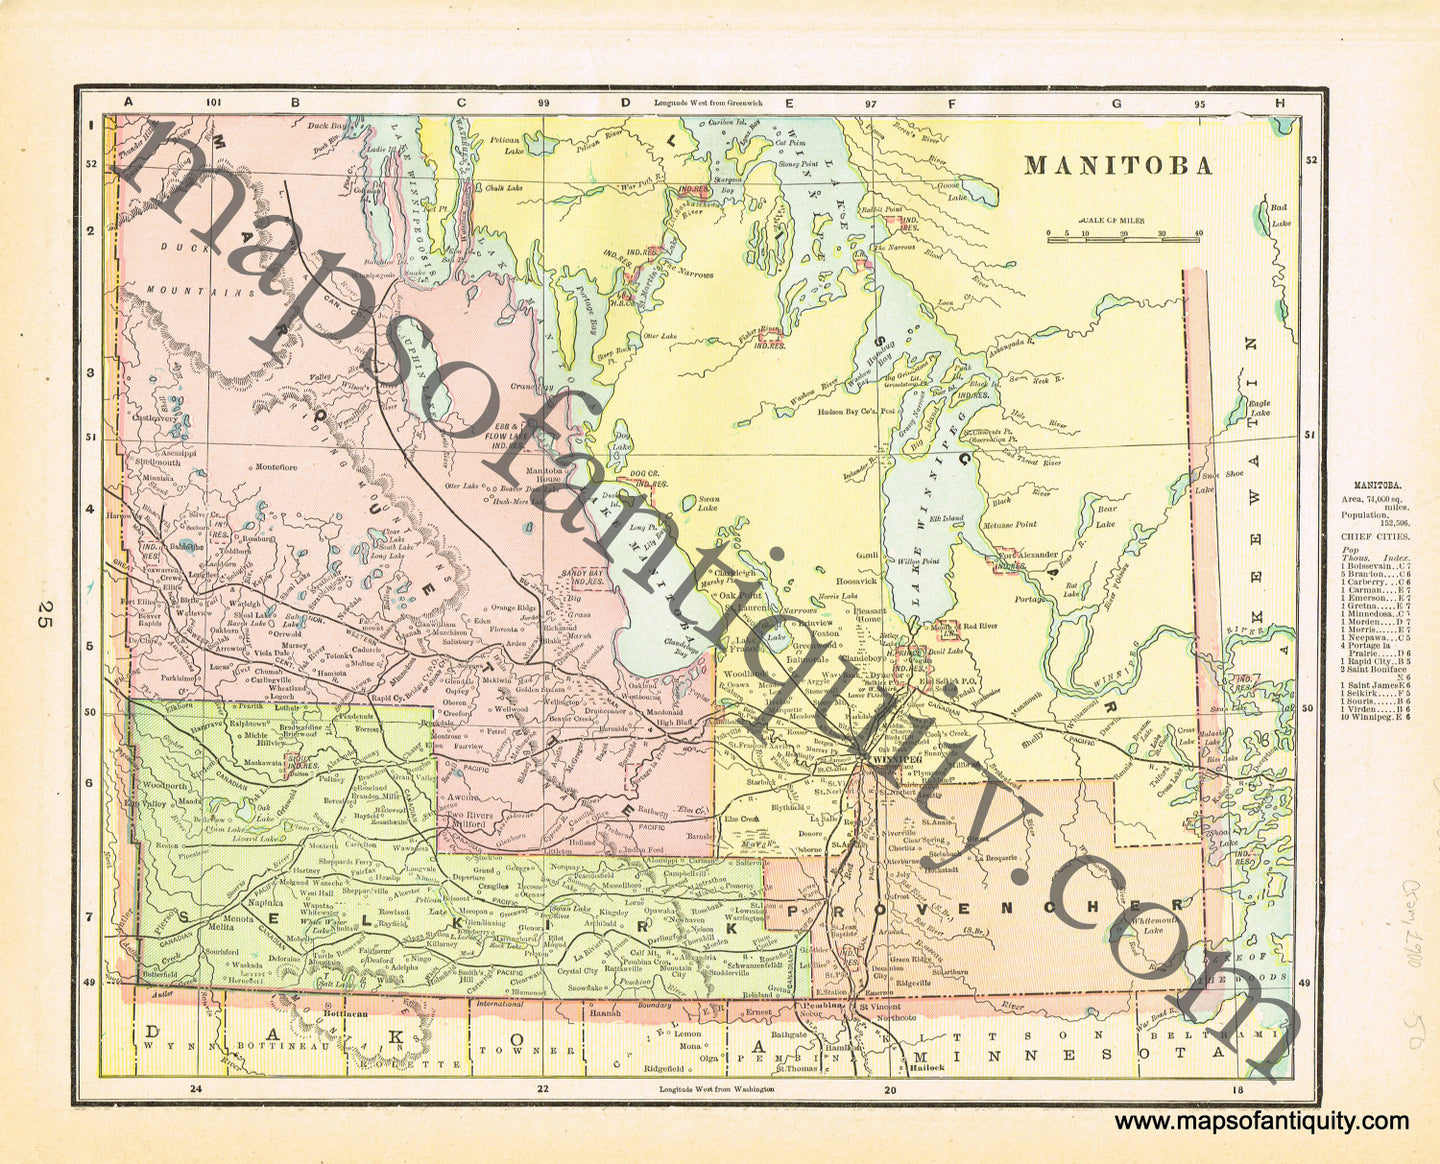 Antique-Printed-Color-Map-Manitoba-verso:-Northwest-Territories-Alberta-Assiniboia-Athabasca-&-Saskatchewan-North-America-Canada-1900-Cram-Maps-Of-Antiquity